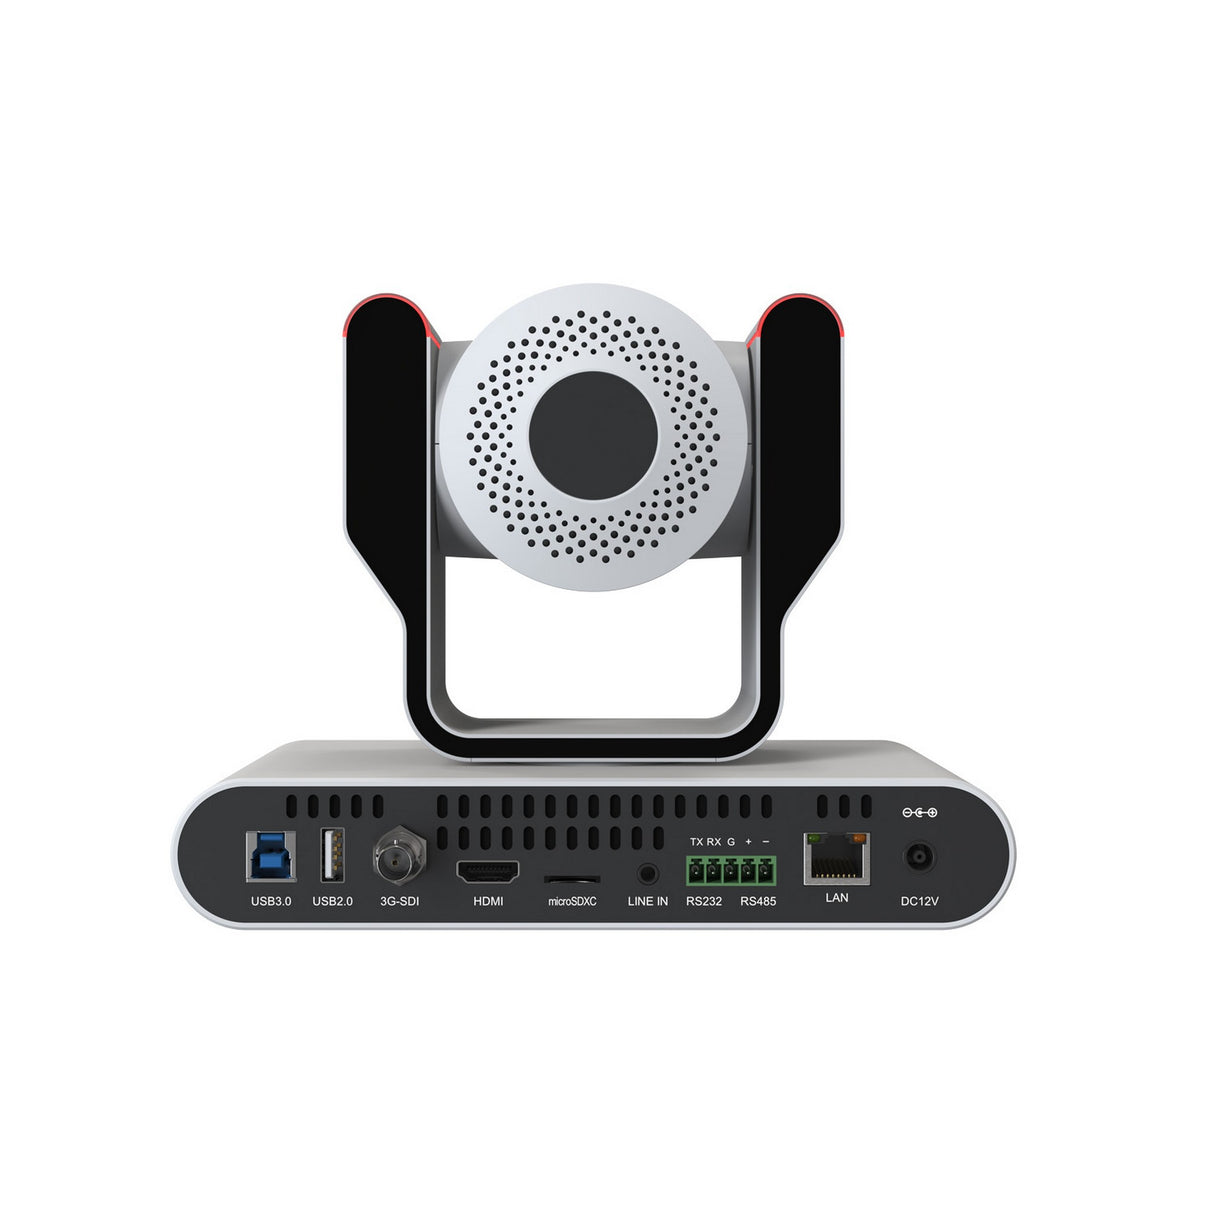 BZBGEAR ADAMO 12X 1080P FHD Auto Tracking HDMI 2.0/12G-SDI/USB 2.0/USB 3.0 Dante AV-H Live Streaming PTZ Camera